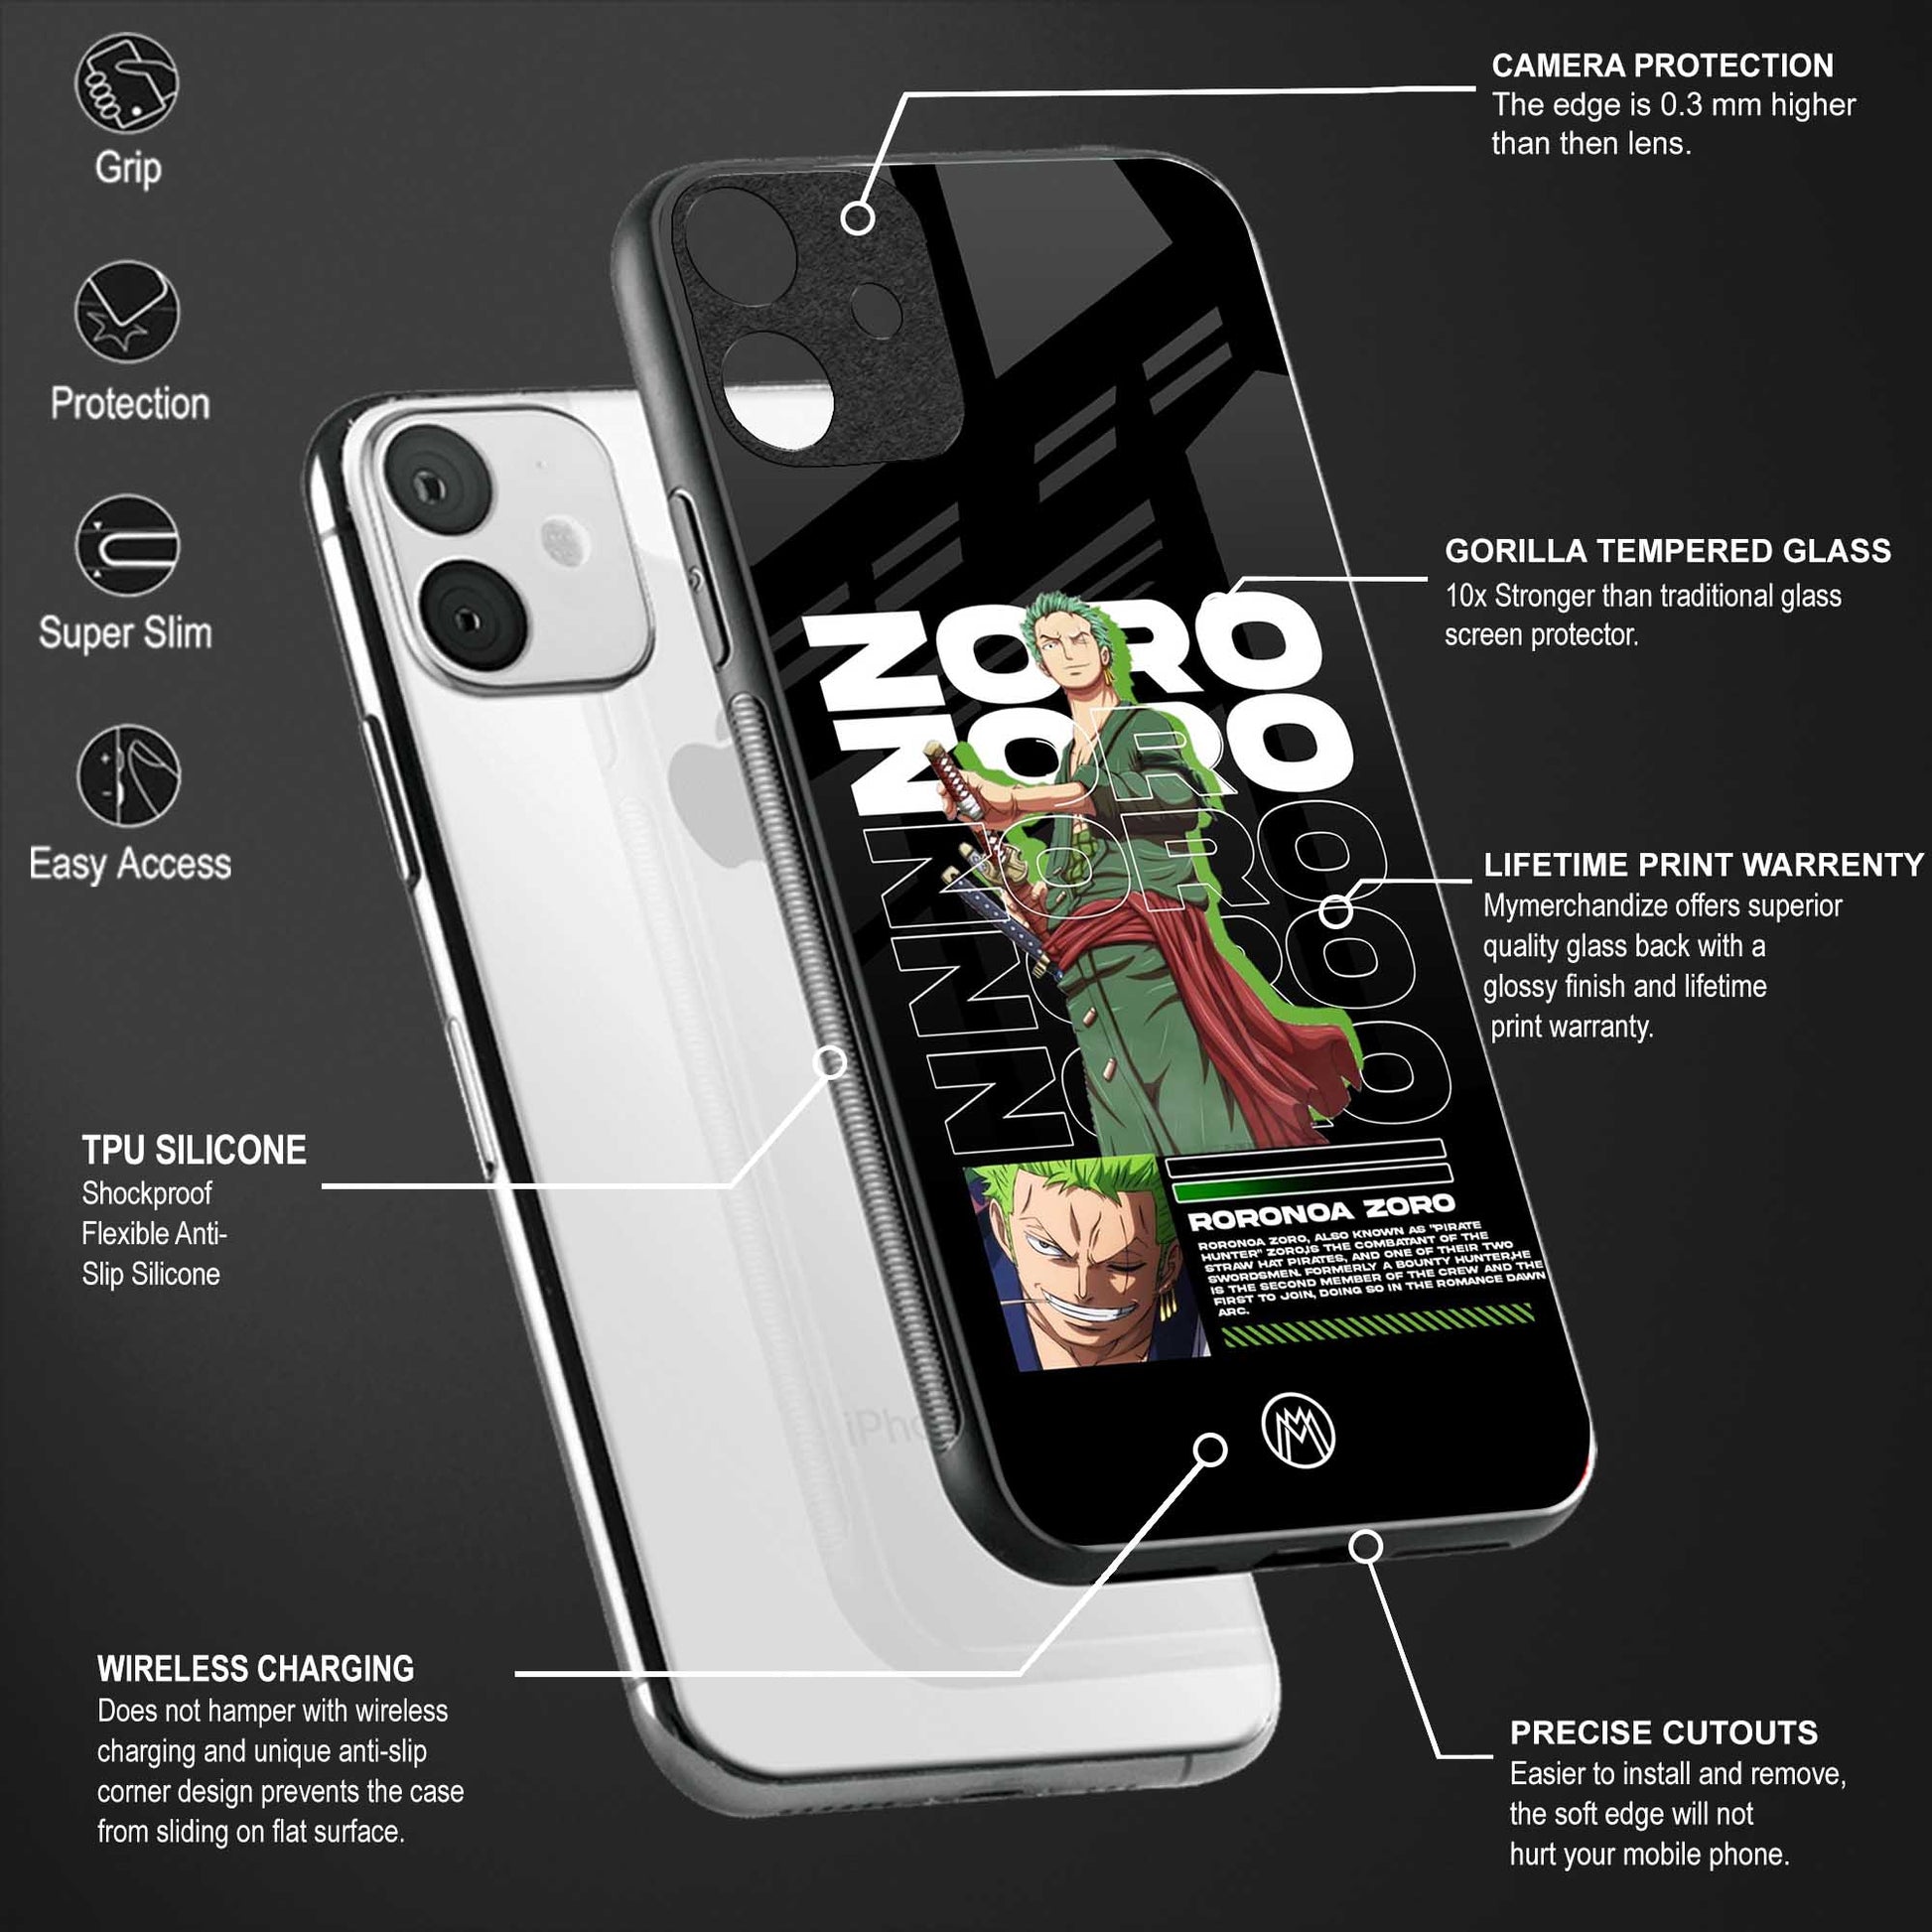 roronoa zoro glass case for iphone 8 plus image-4